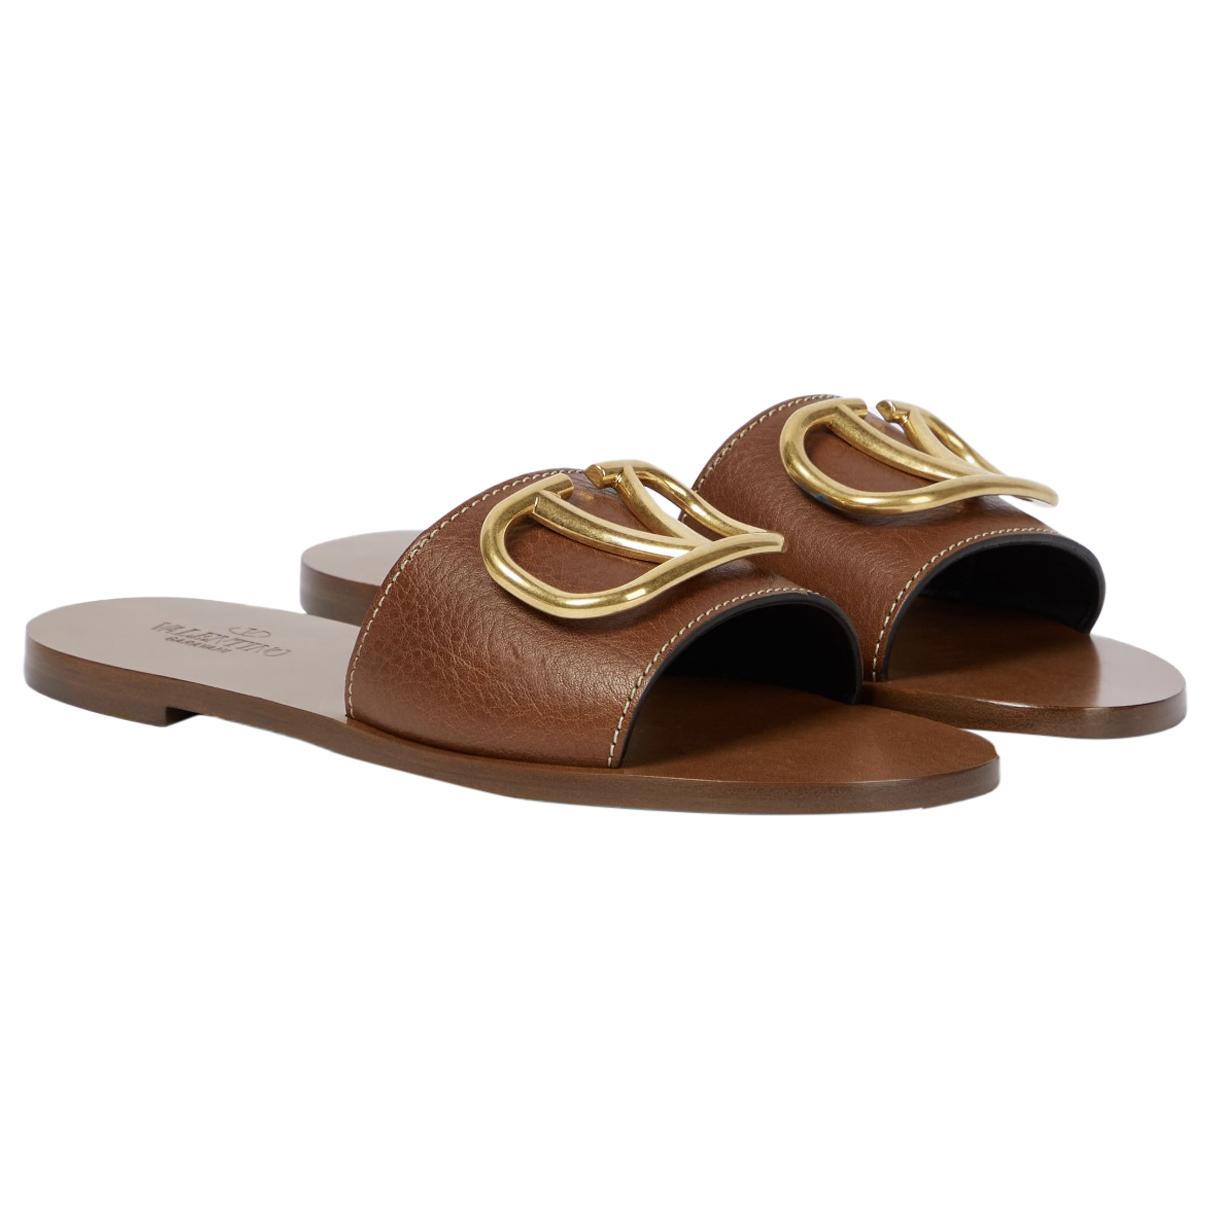 VLogo leather sandal - 1